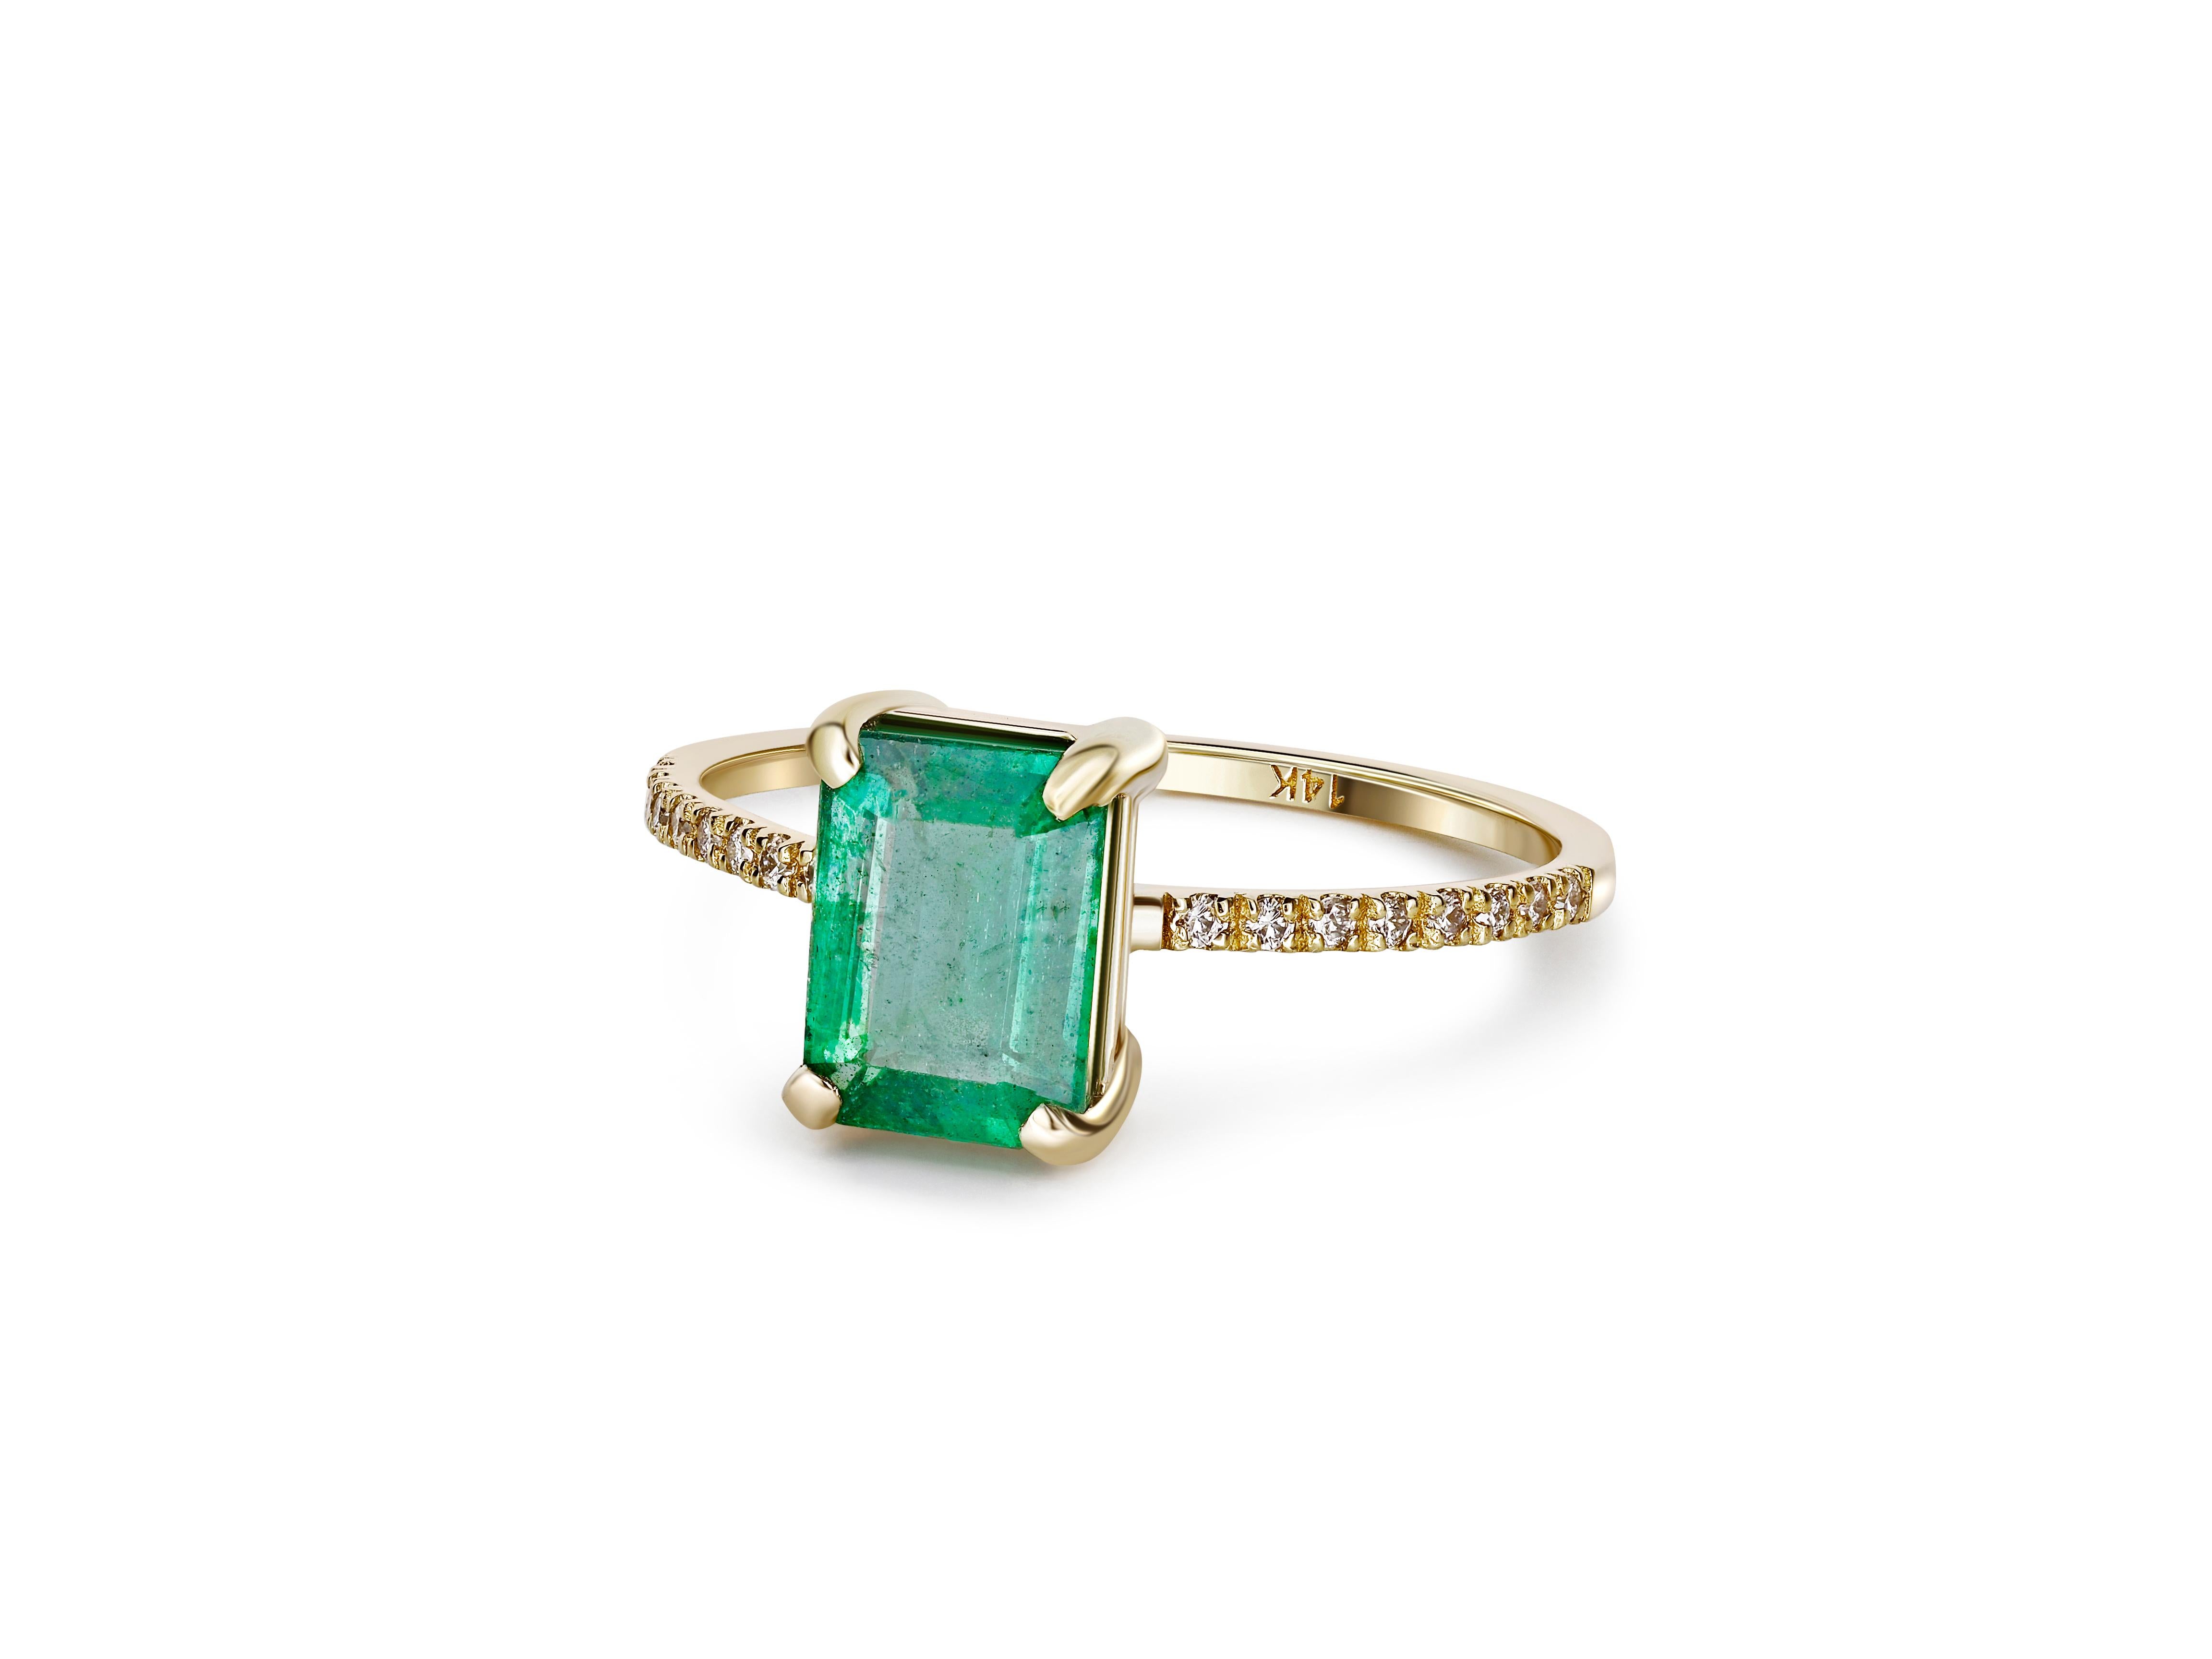 Emerald Cut Emerald ring in 14 k gold.  For Sale